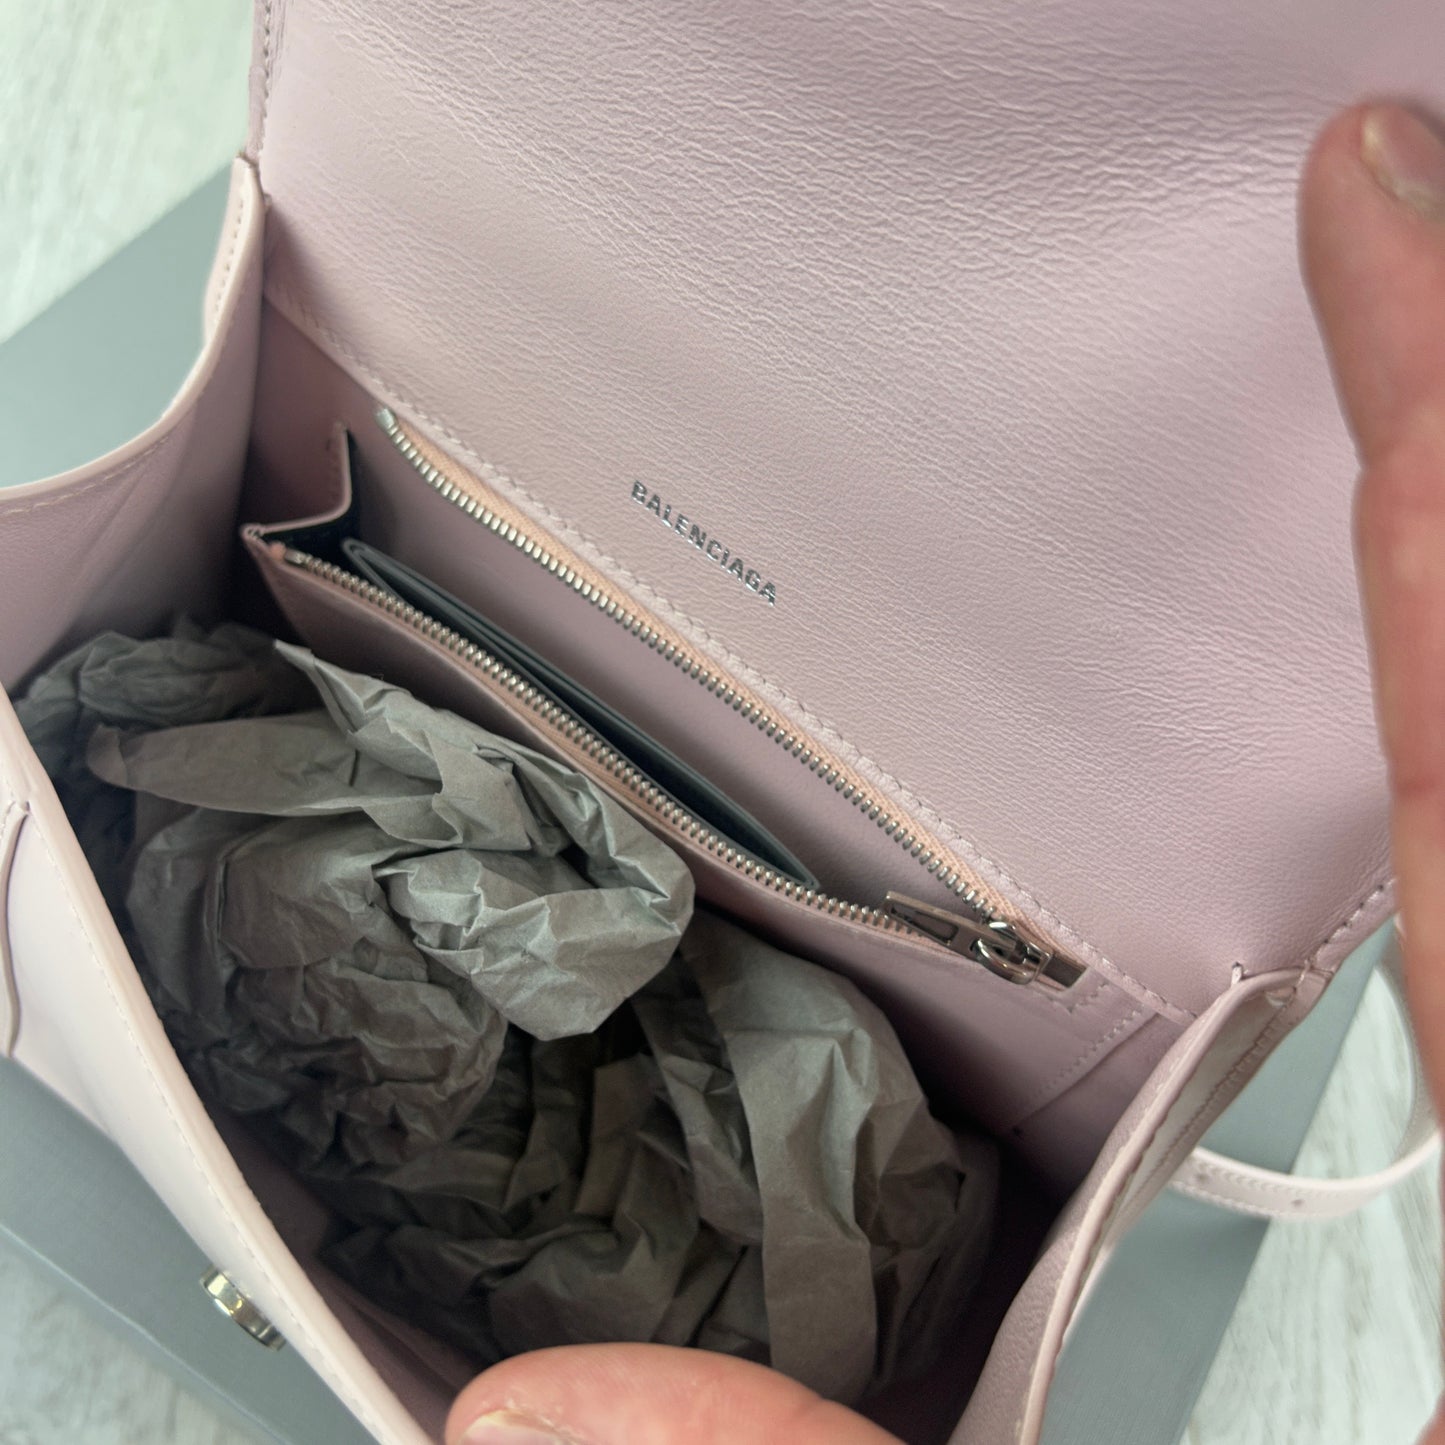 Balenciaga Women’s Pink Small Hourglass Handbag